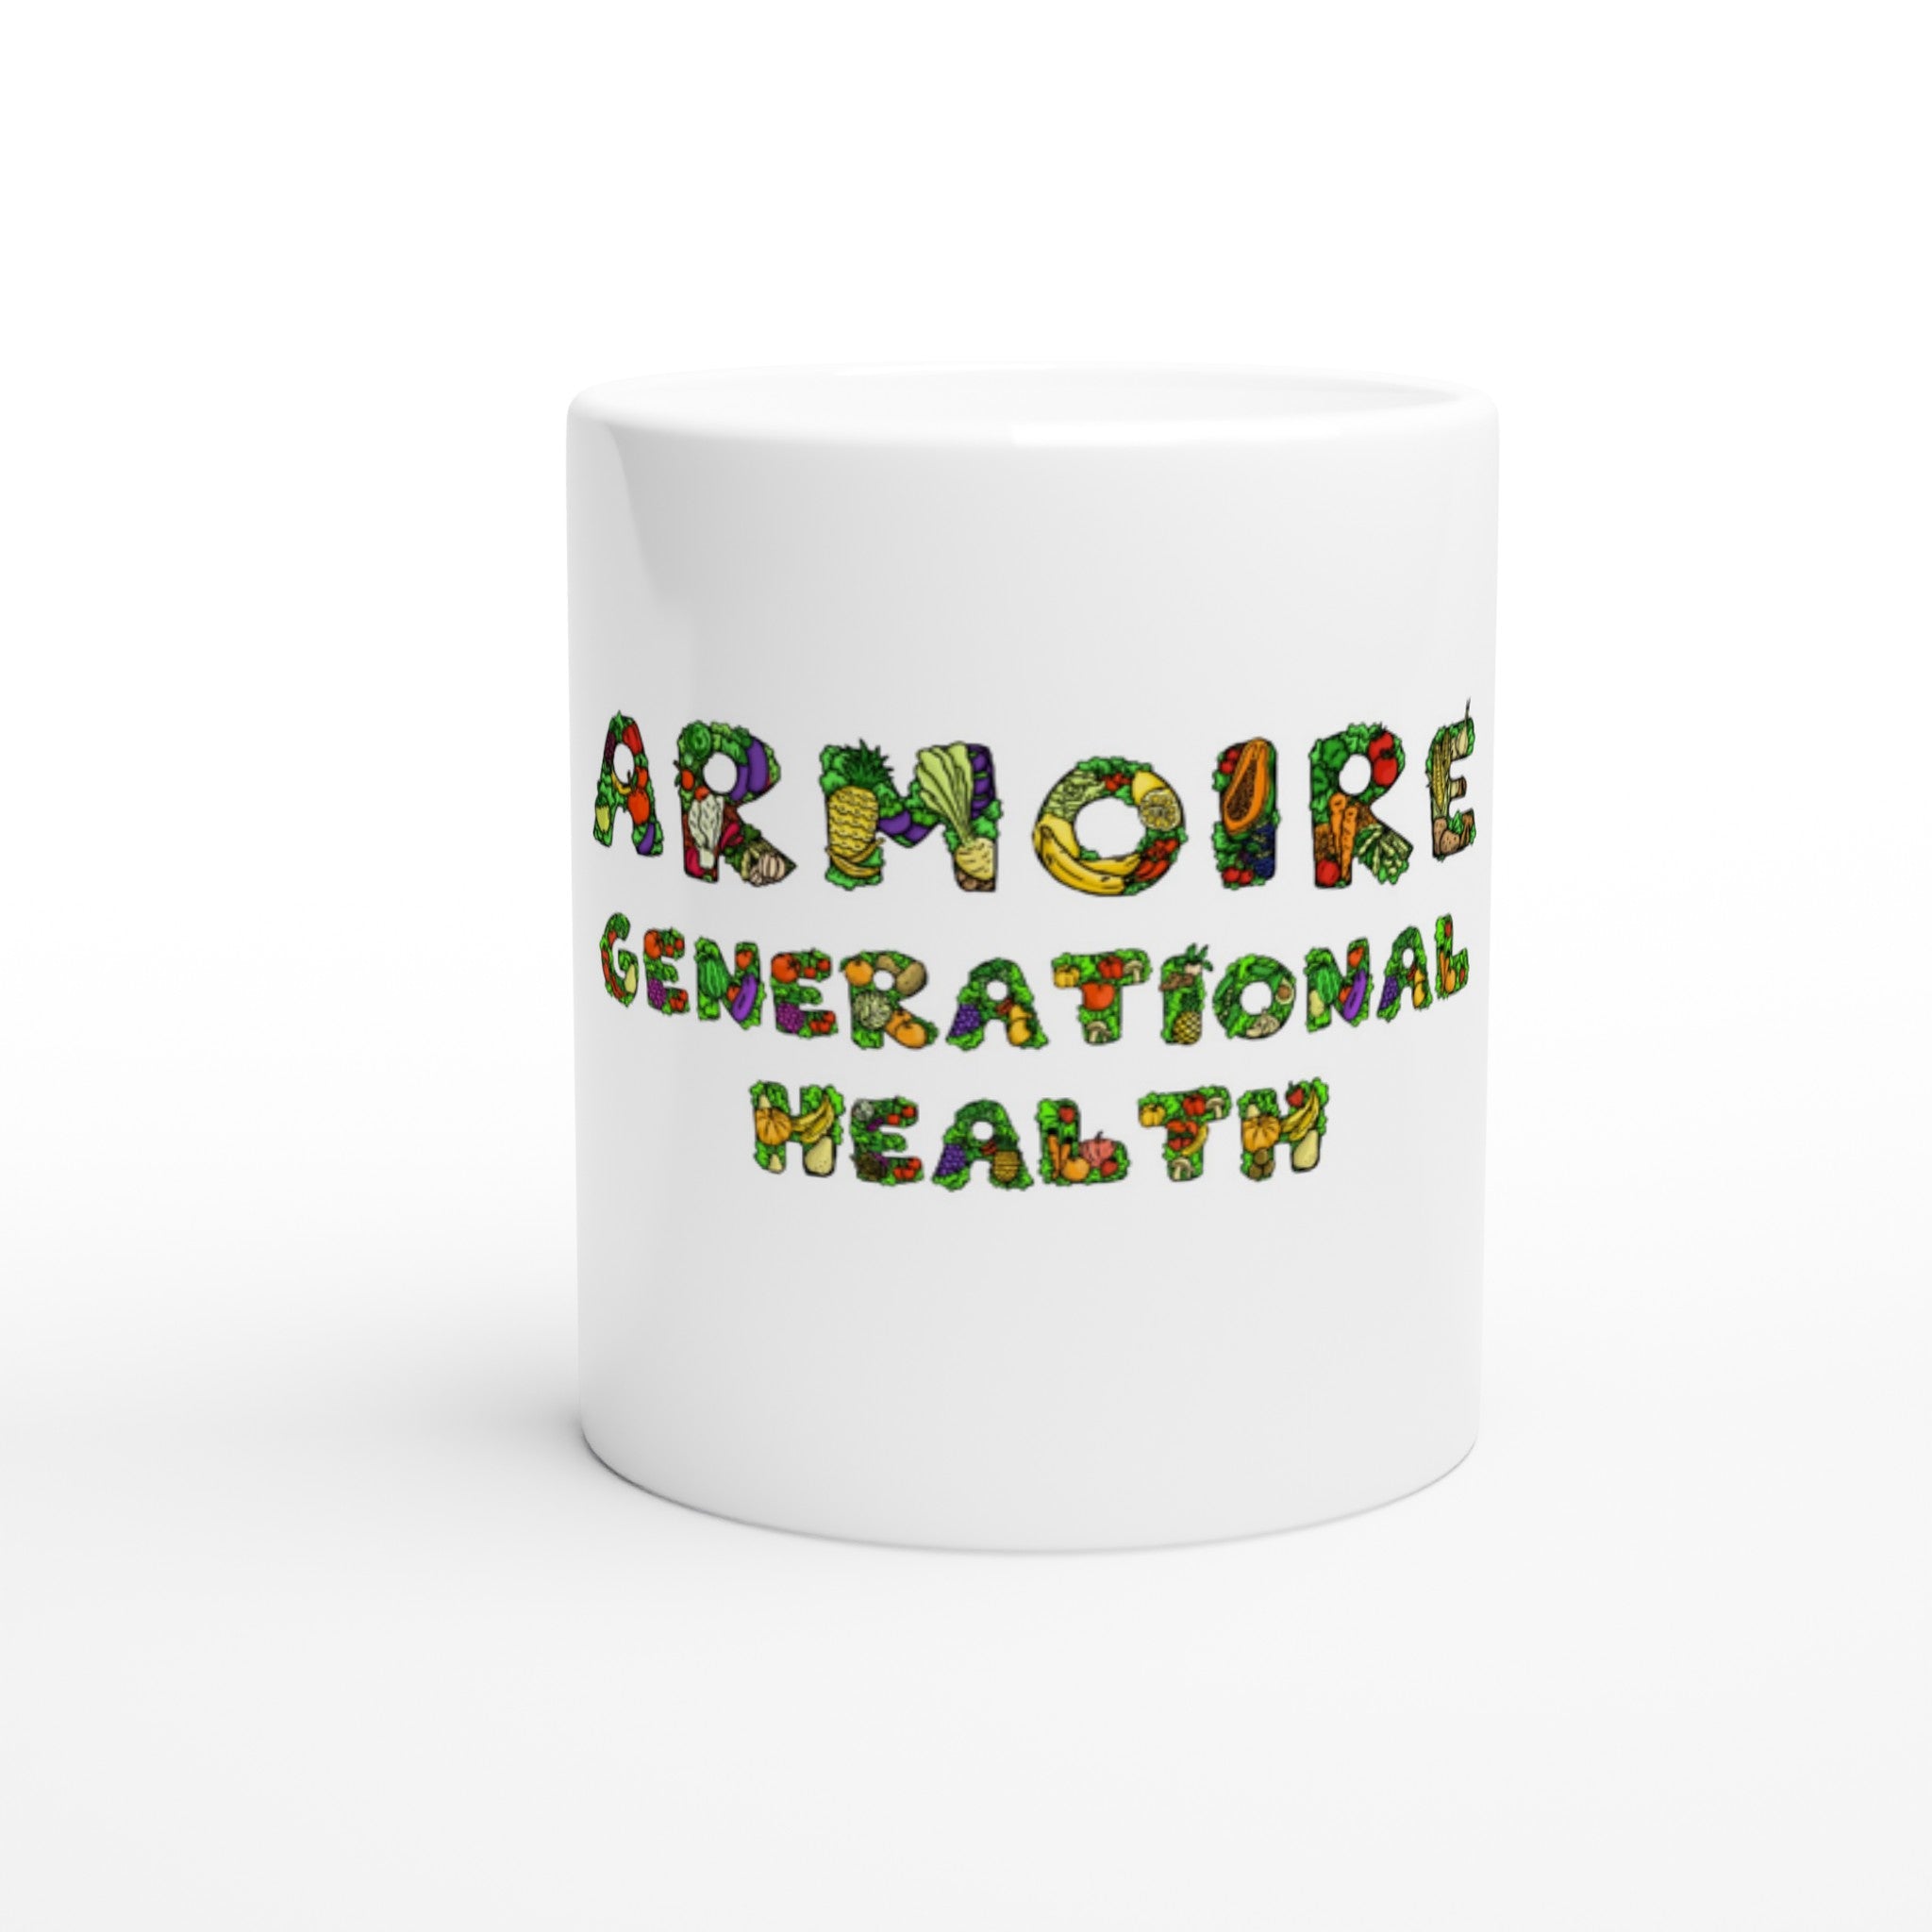 White 11oz Ceramic Mug - Generational Health